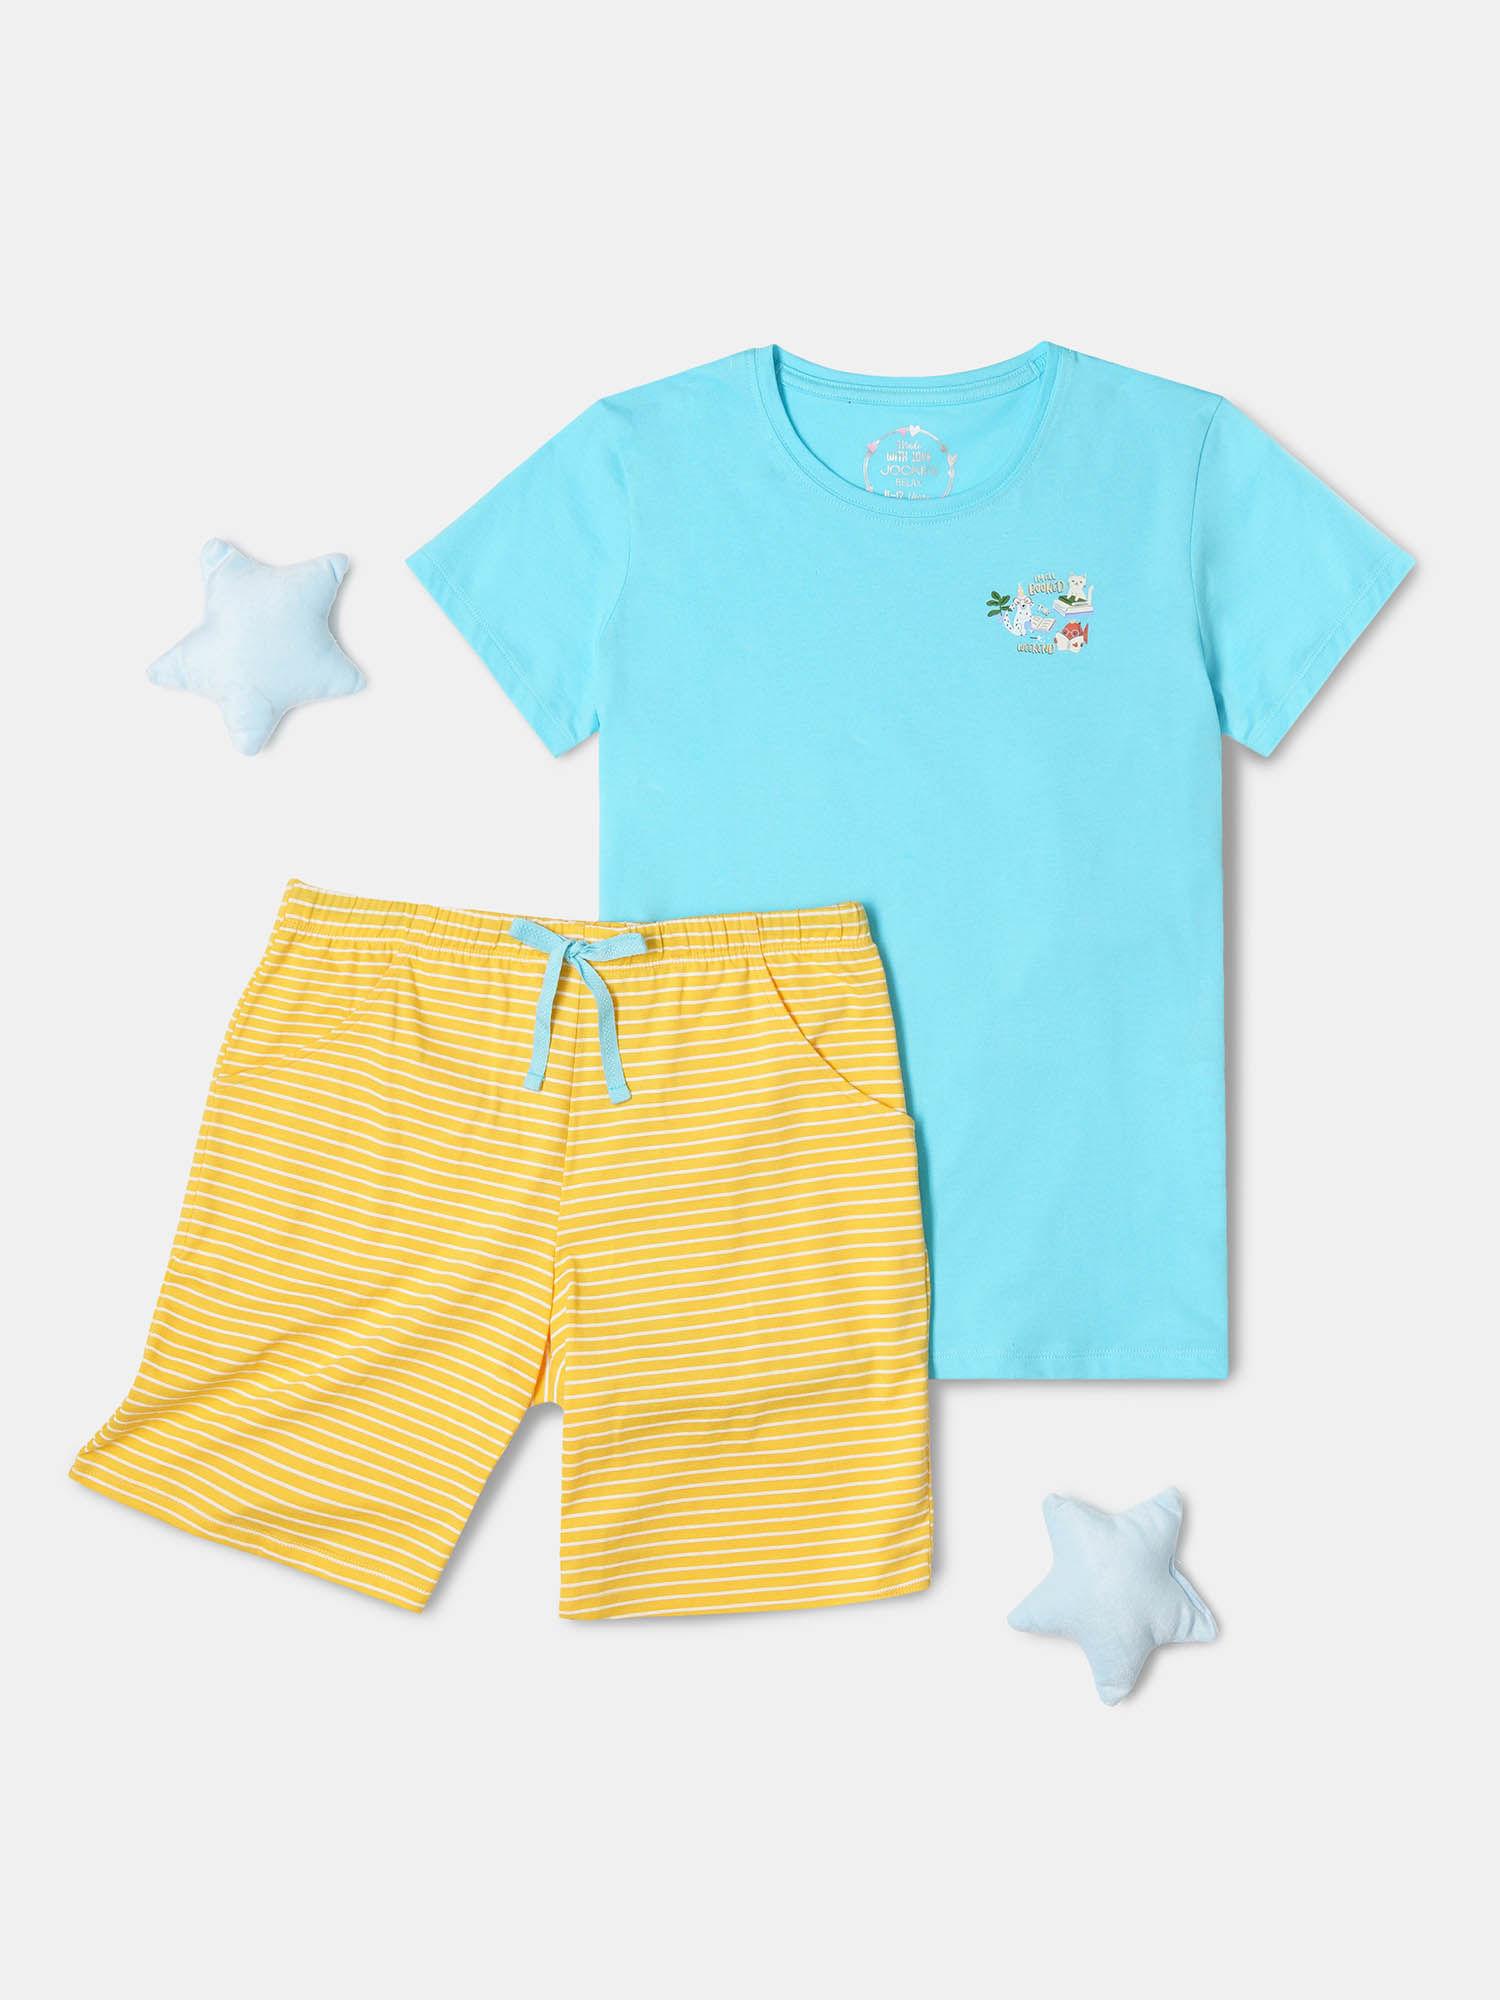 rg11-girl's-cotton-shorts-&-t-shirt-spectra-blue-&-yellow-(set-of-2)